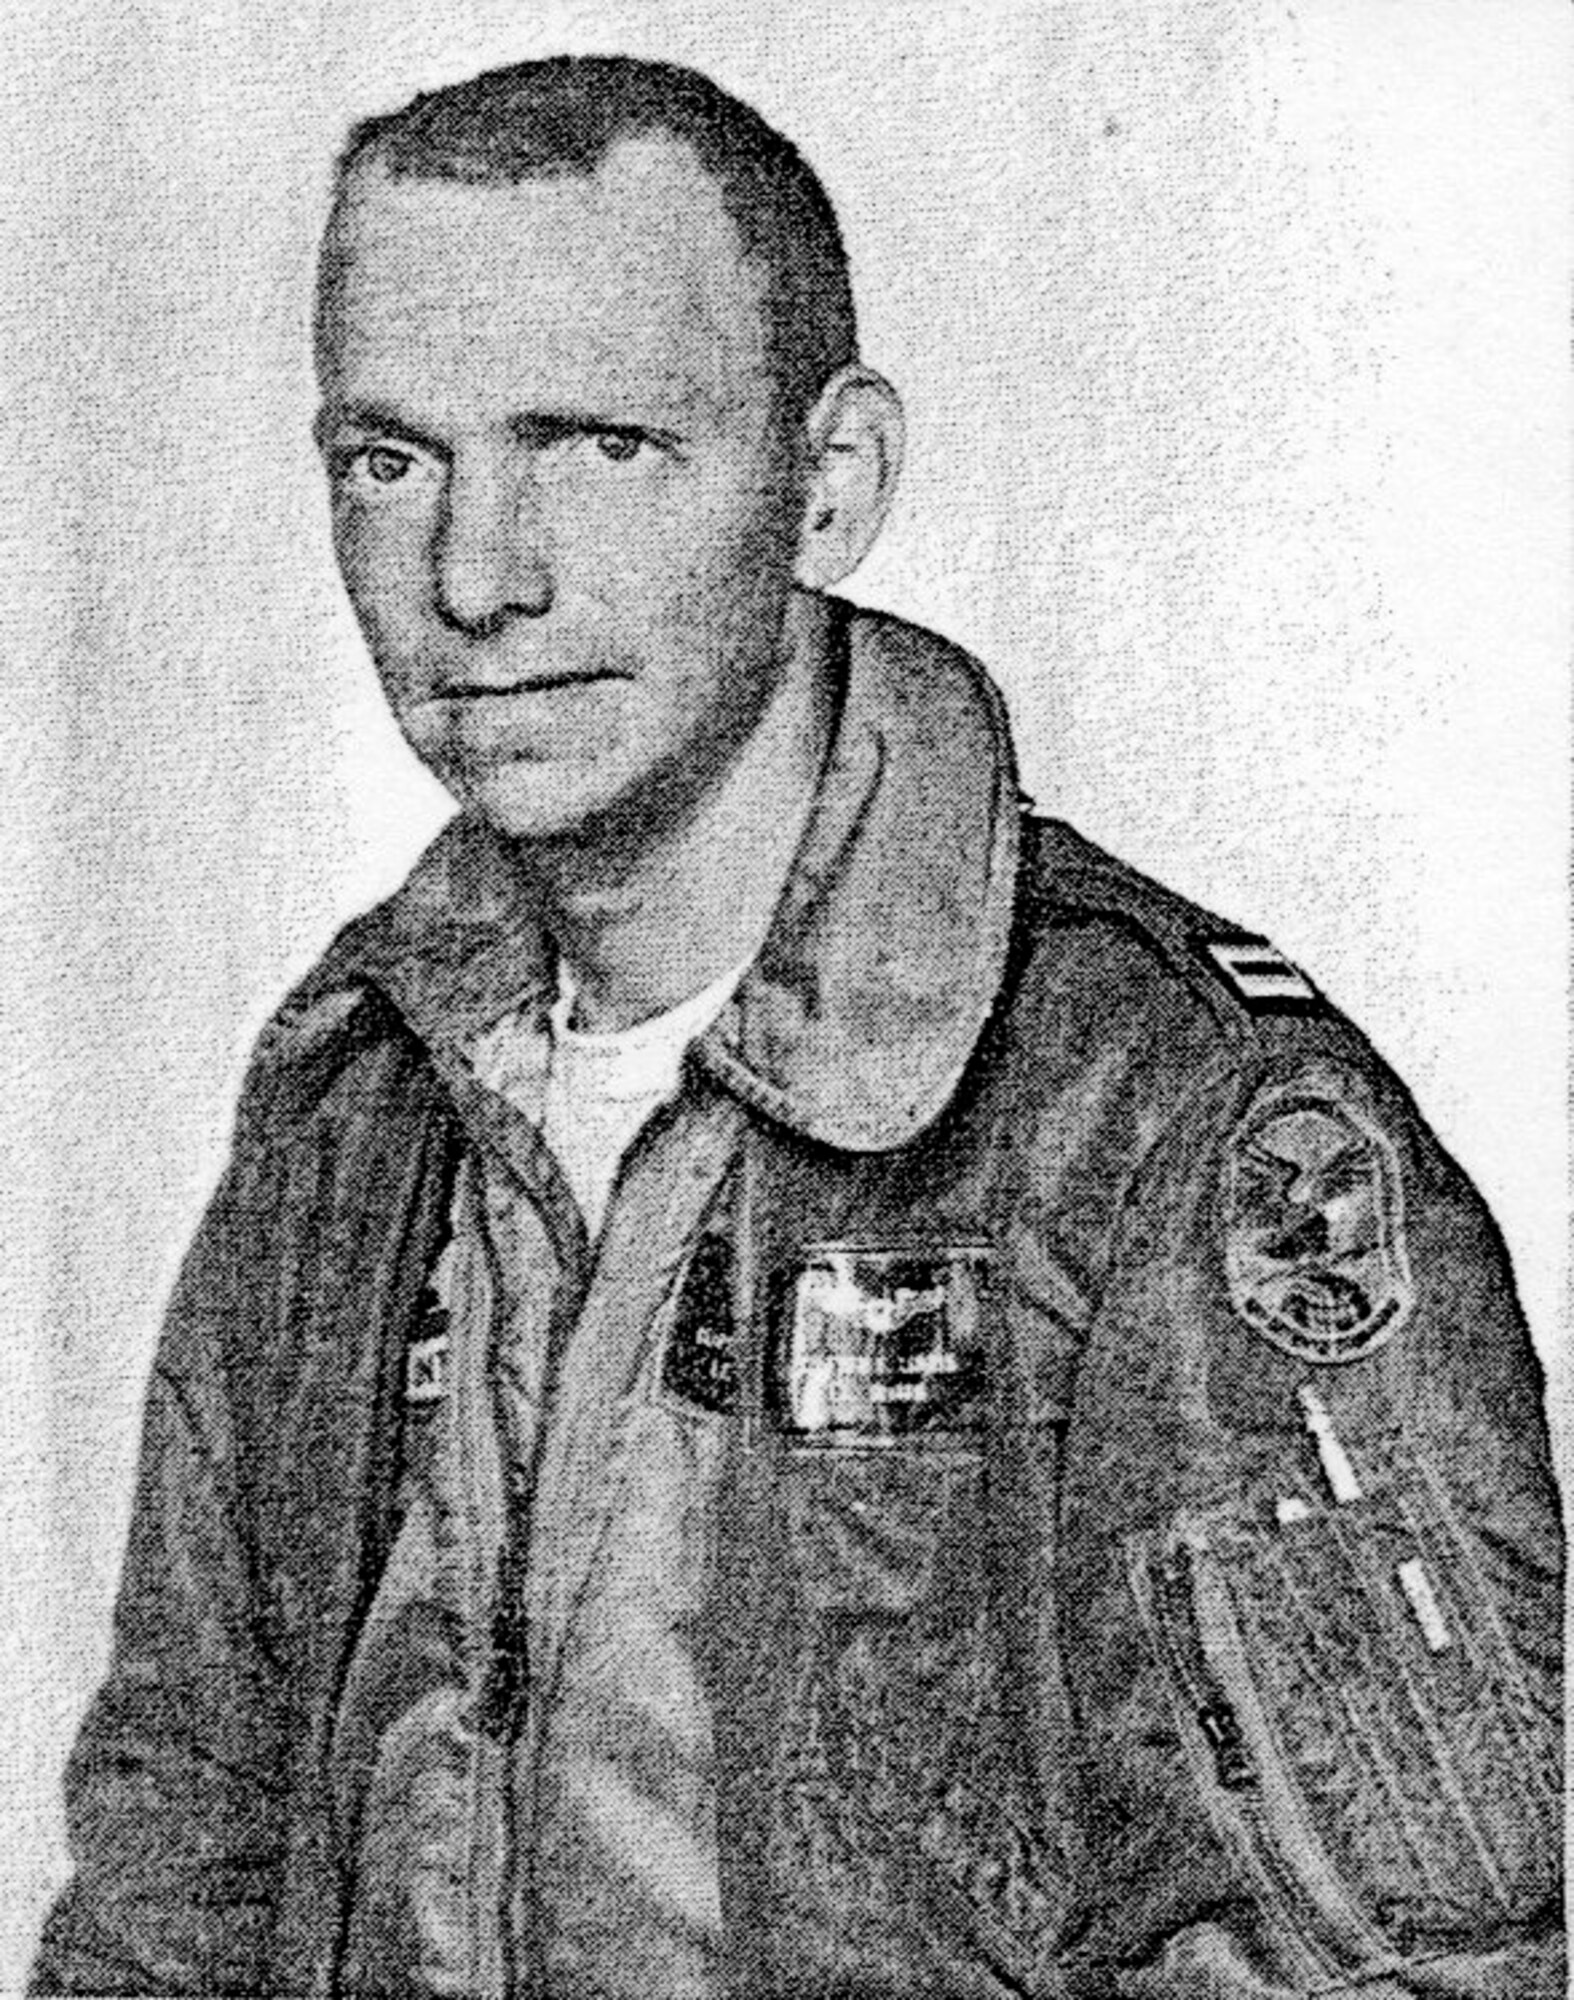 Capt. Clifford Landis, 142nd Fighter Interceptor Group, Oregon Air National Guard. 